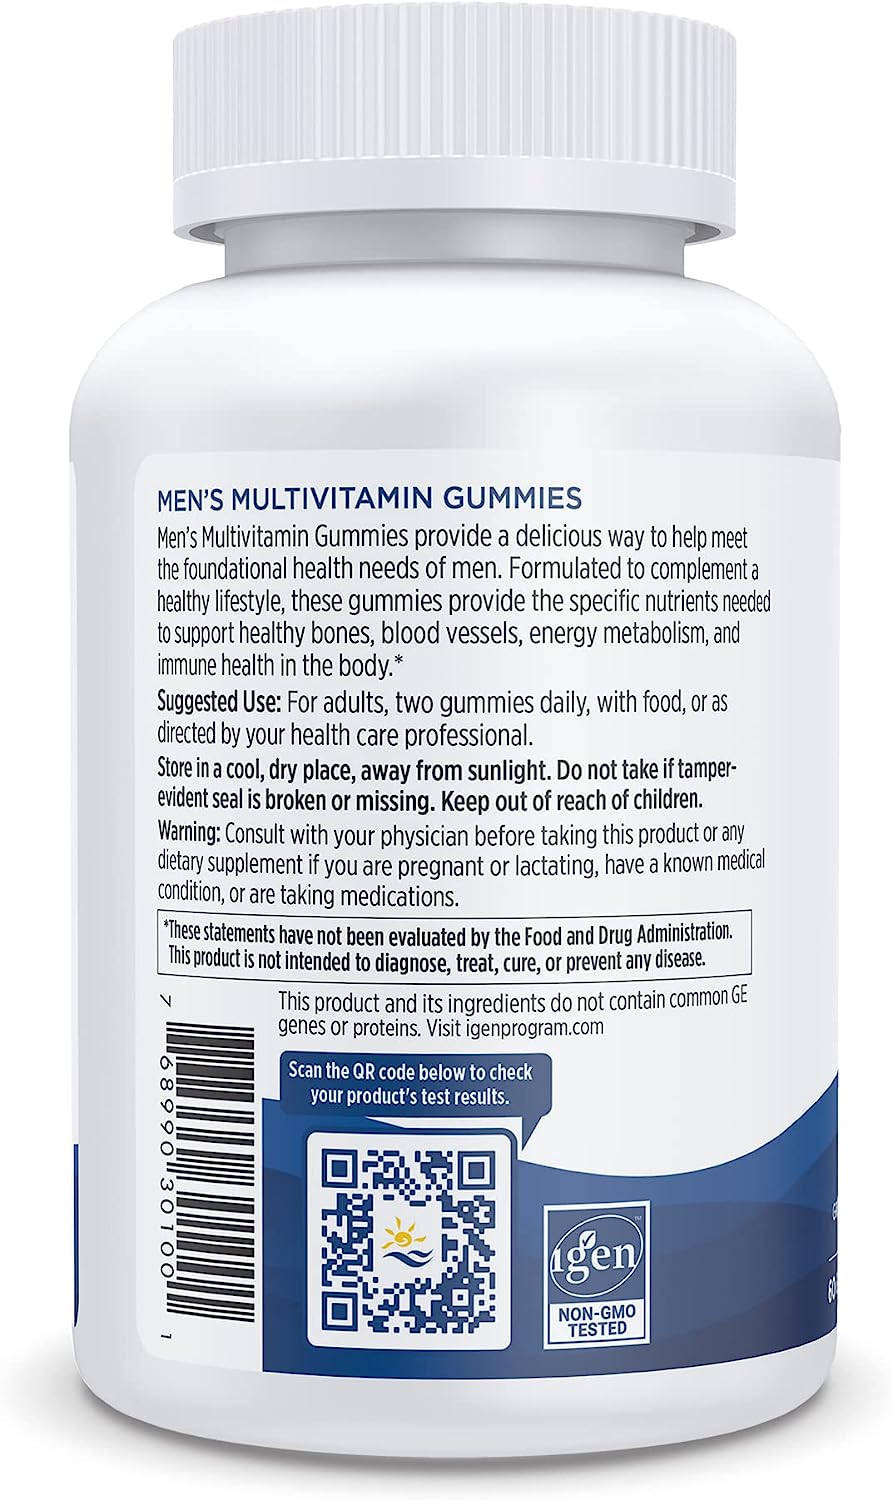 Nordic Naturals Men's Multivitamin Gummies, Mixed Berry - Support for Healthy Bones, Blood Vessels, Energy & Immunity, 60 Gummies